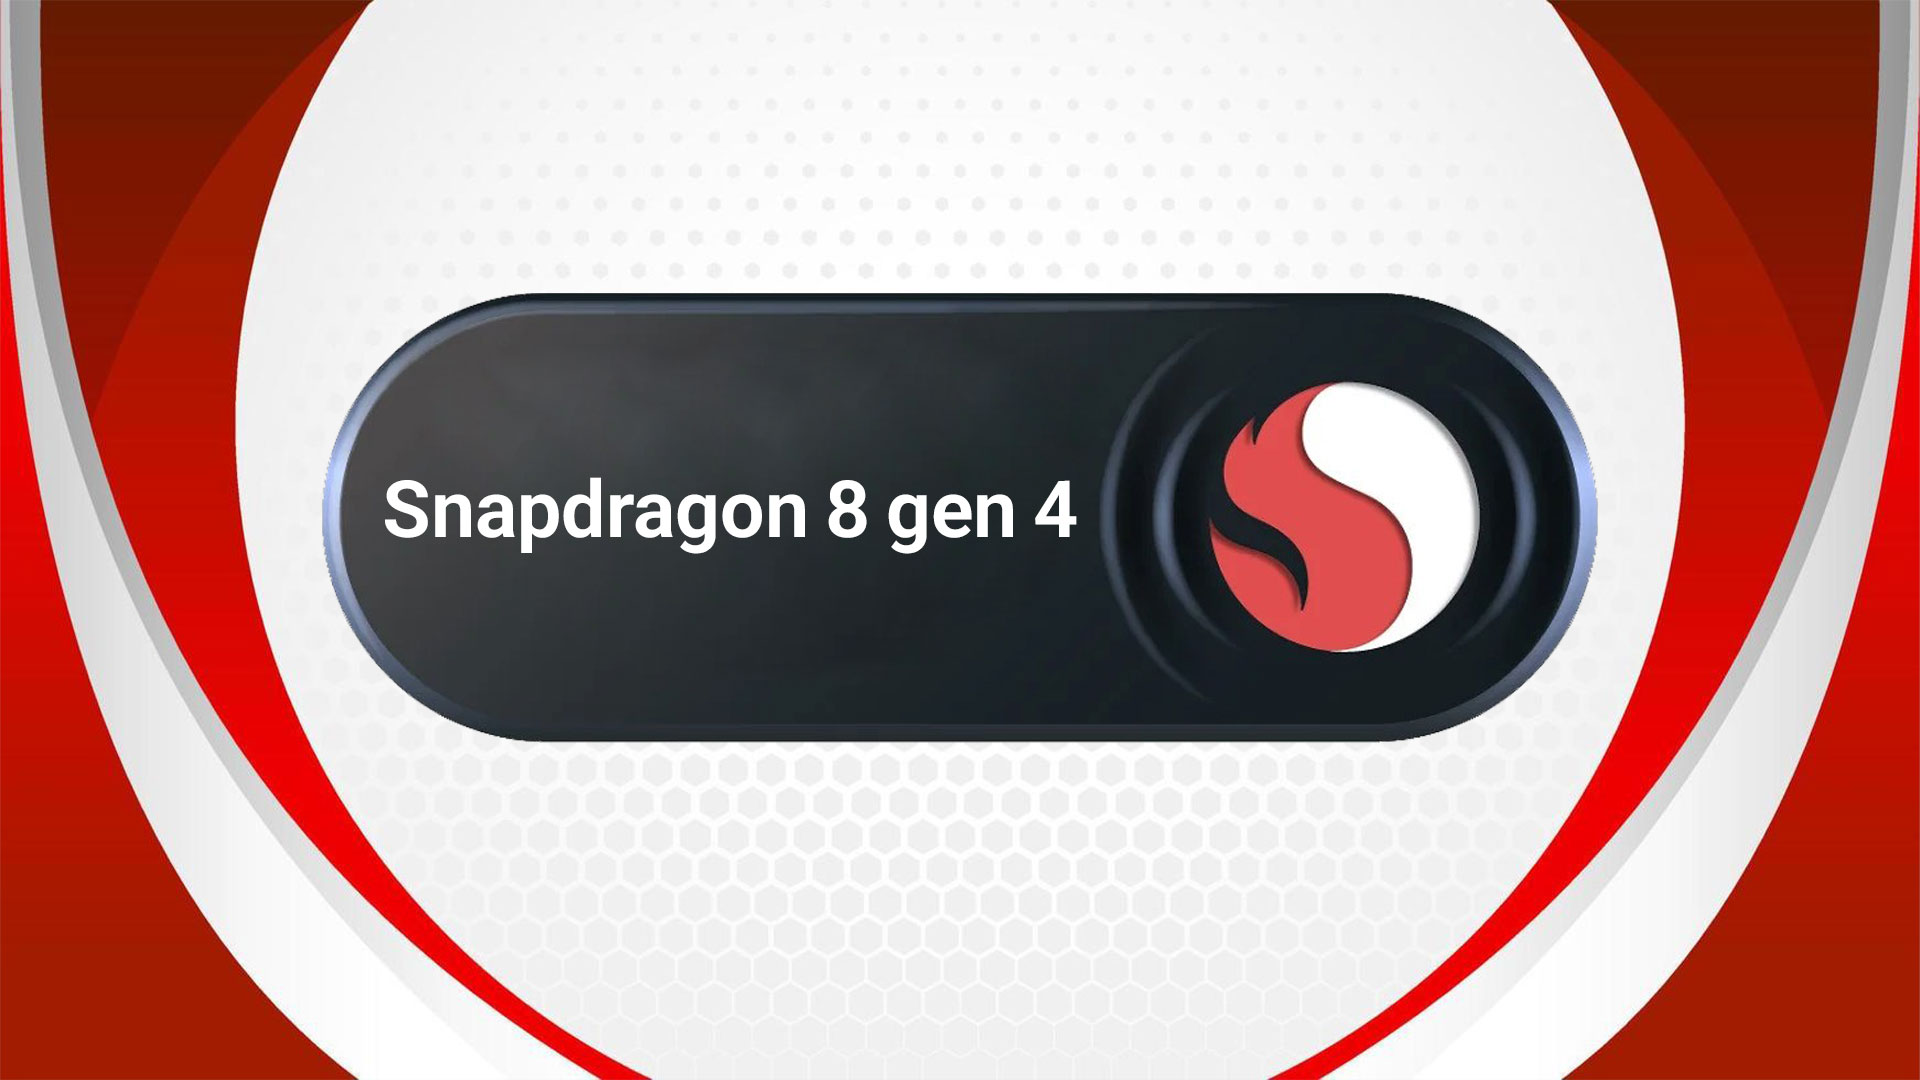 Snapdragon 8 generation 4